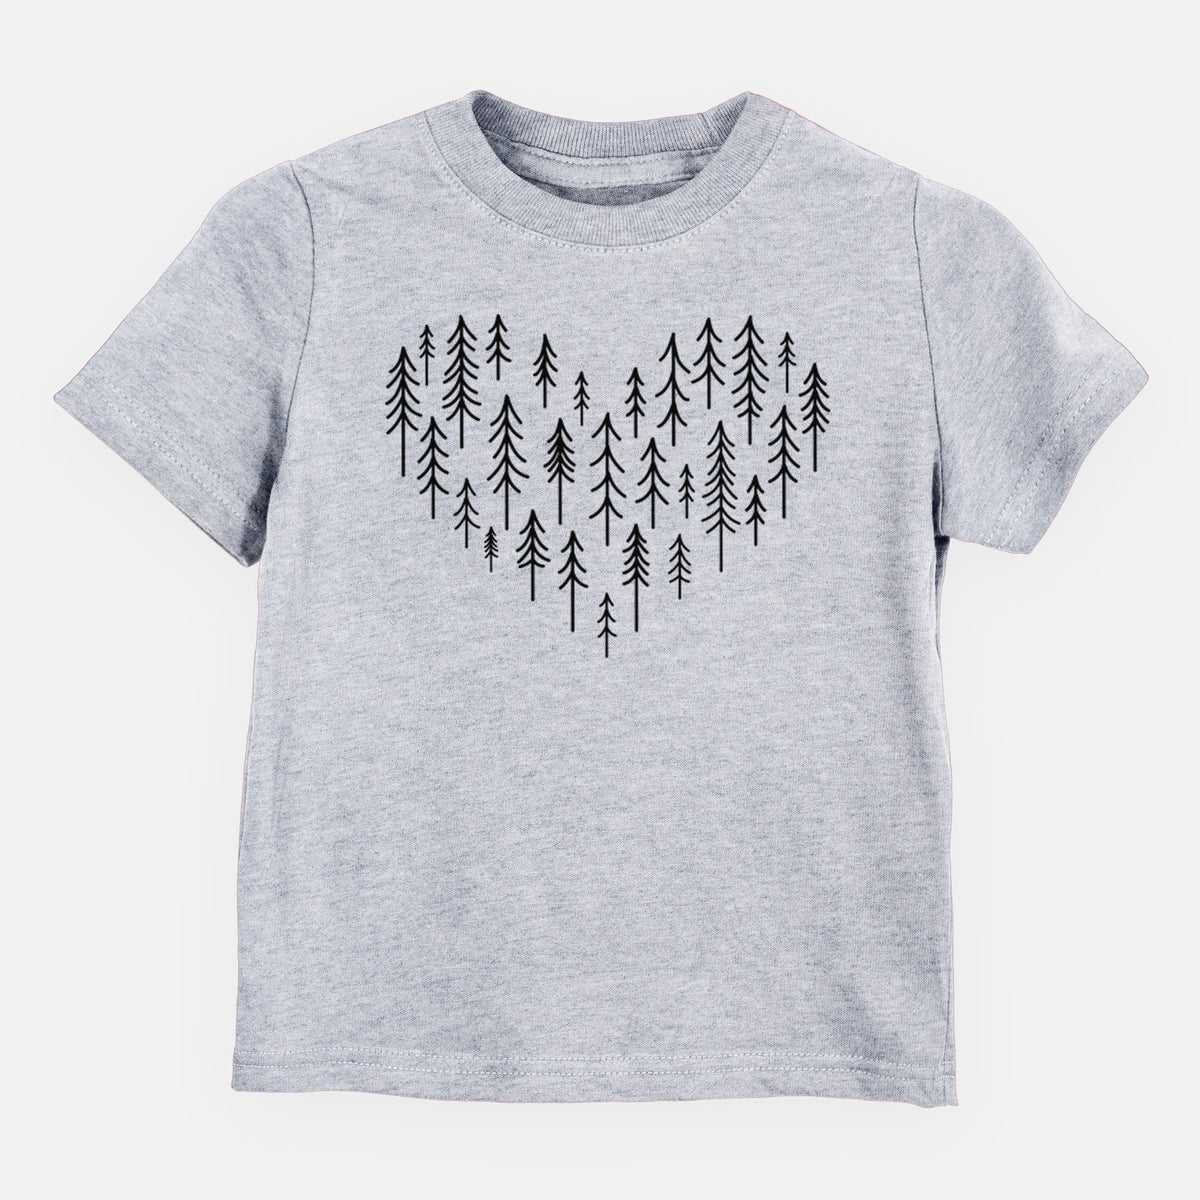 Heart of Trees - Kids Shirt